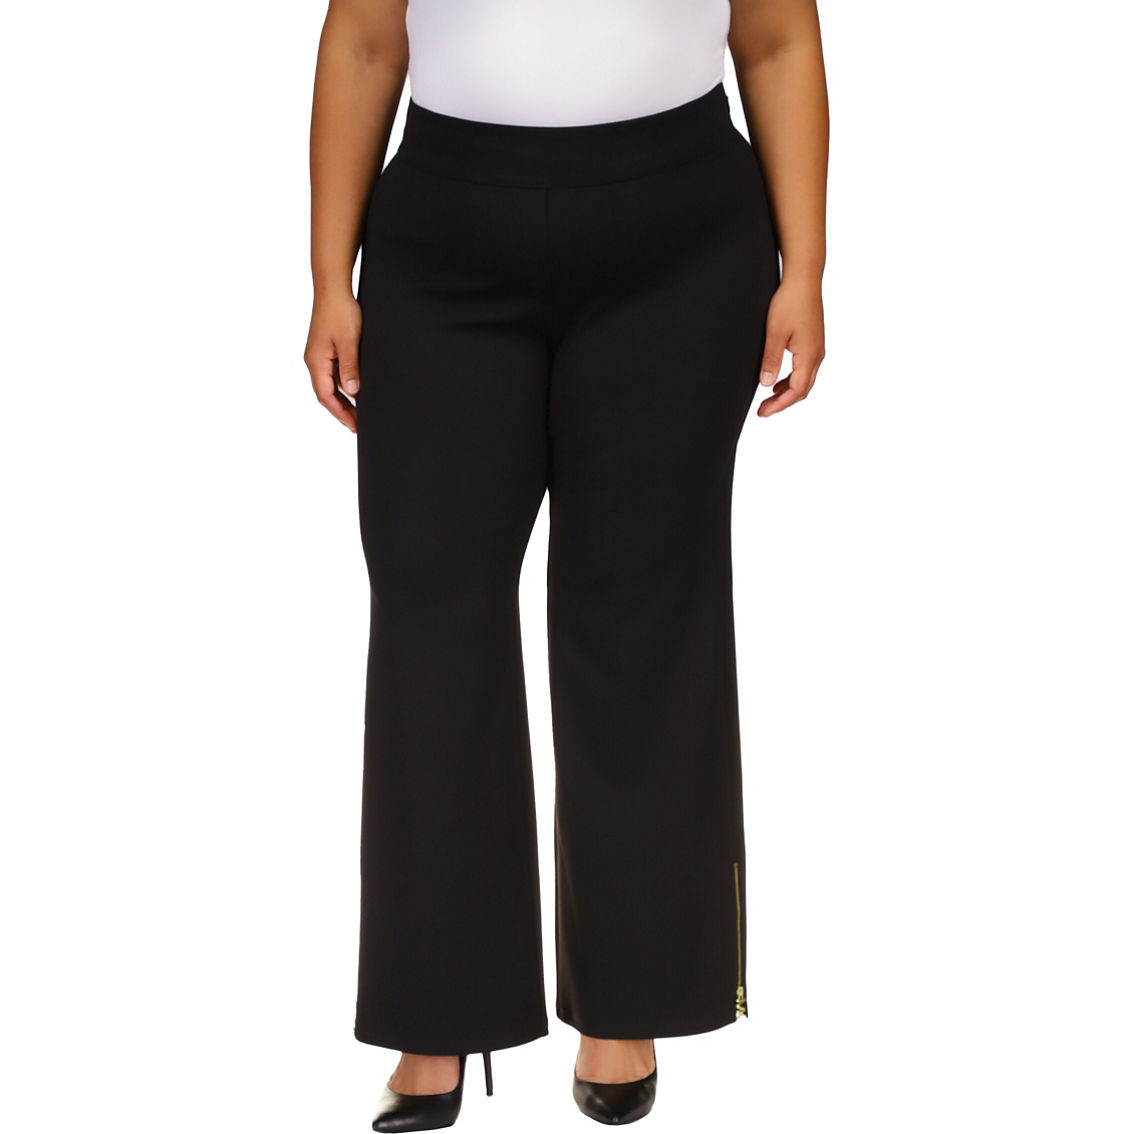 Michael Kors Plus Size Full Length Zip Split Pants | Pants | Clothing ...